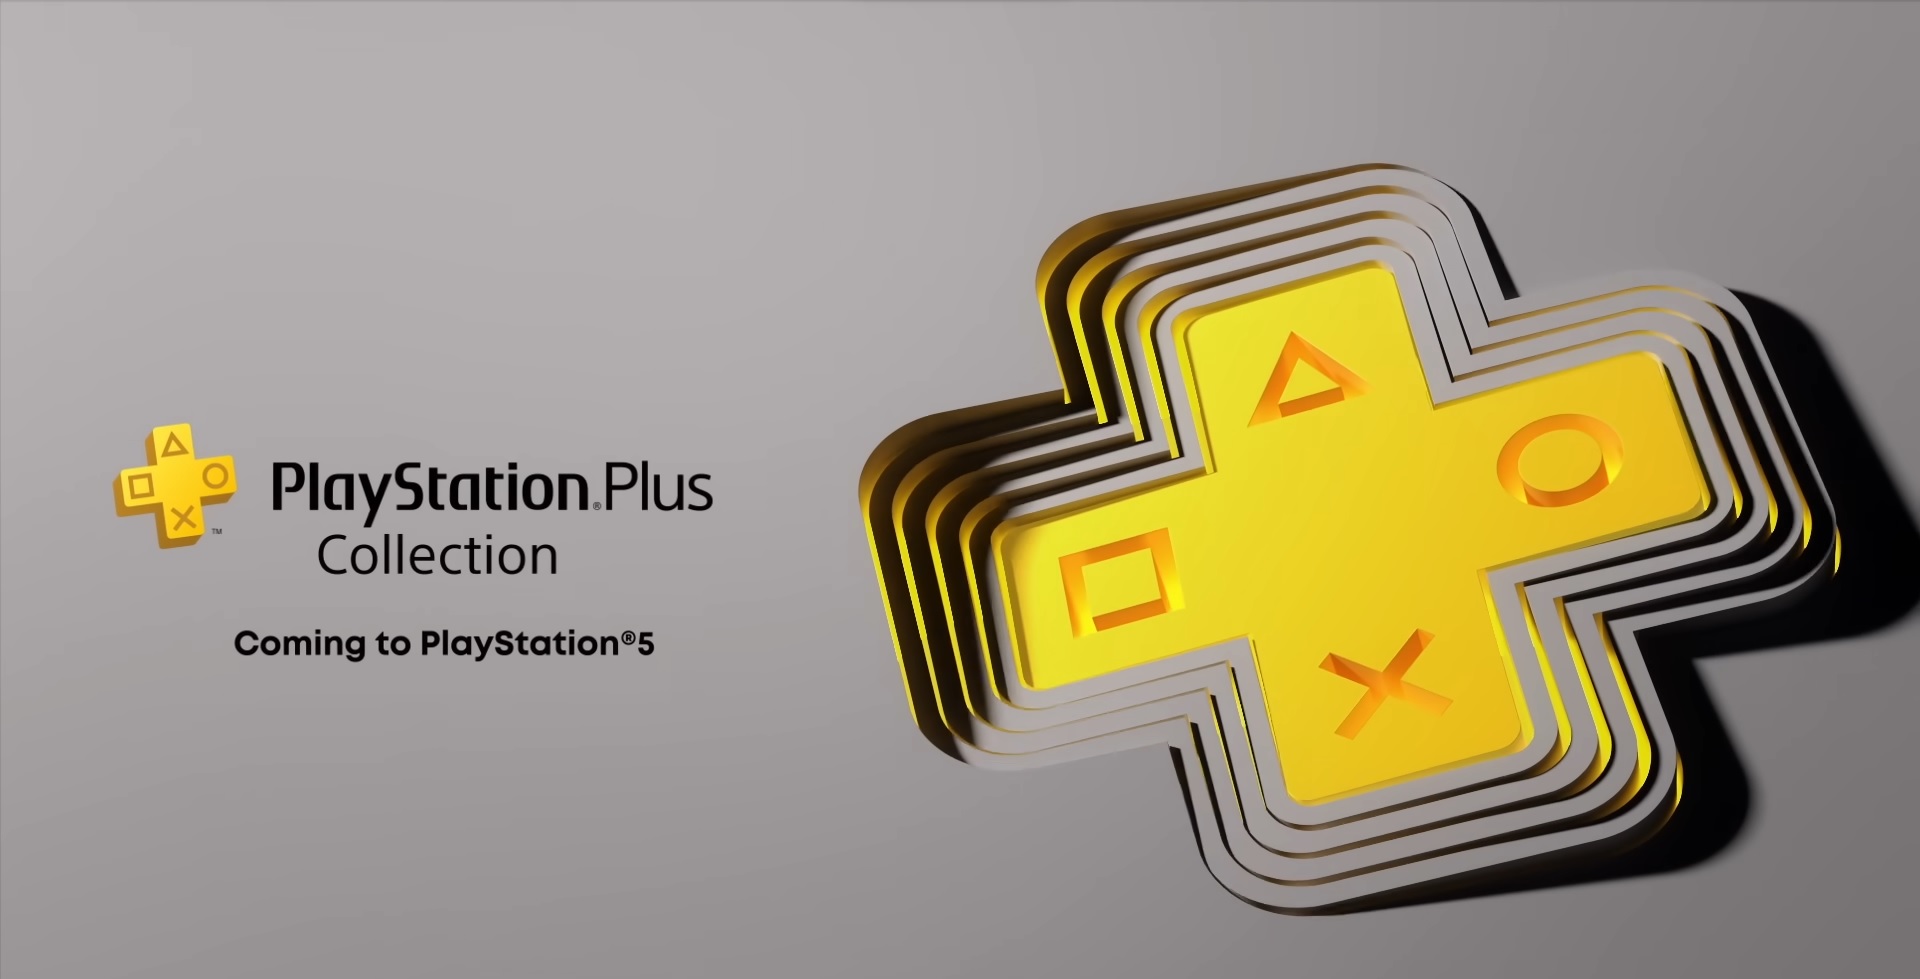 PlayStation Plus Collection zapowiedź